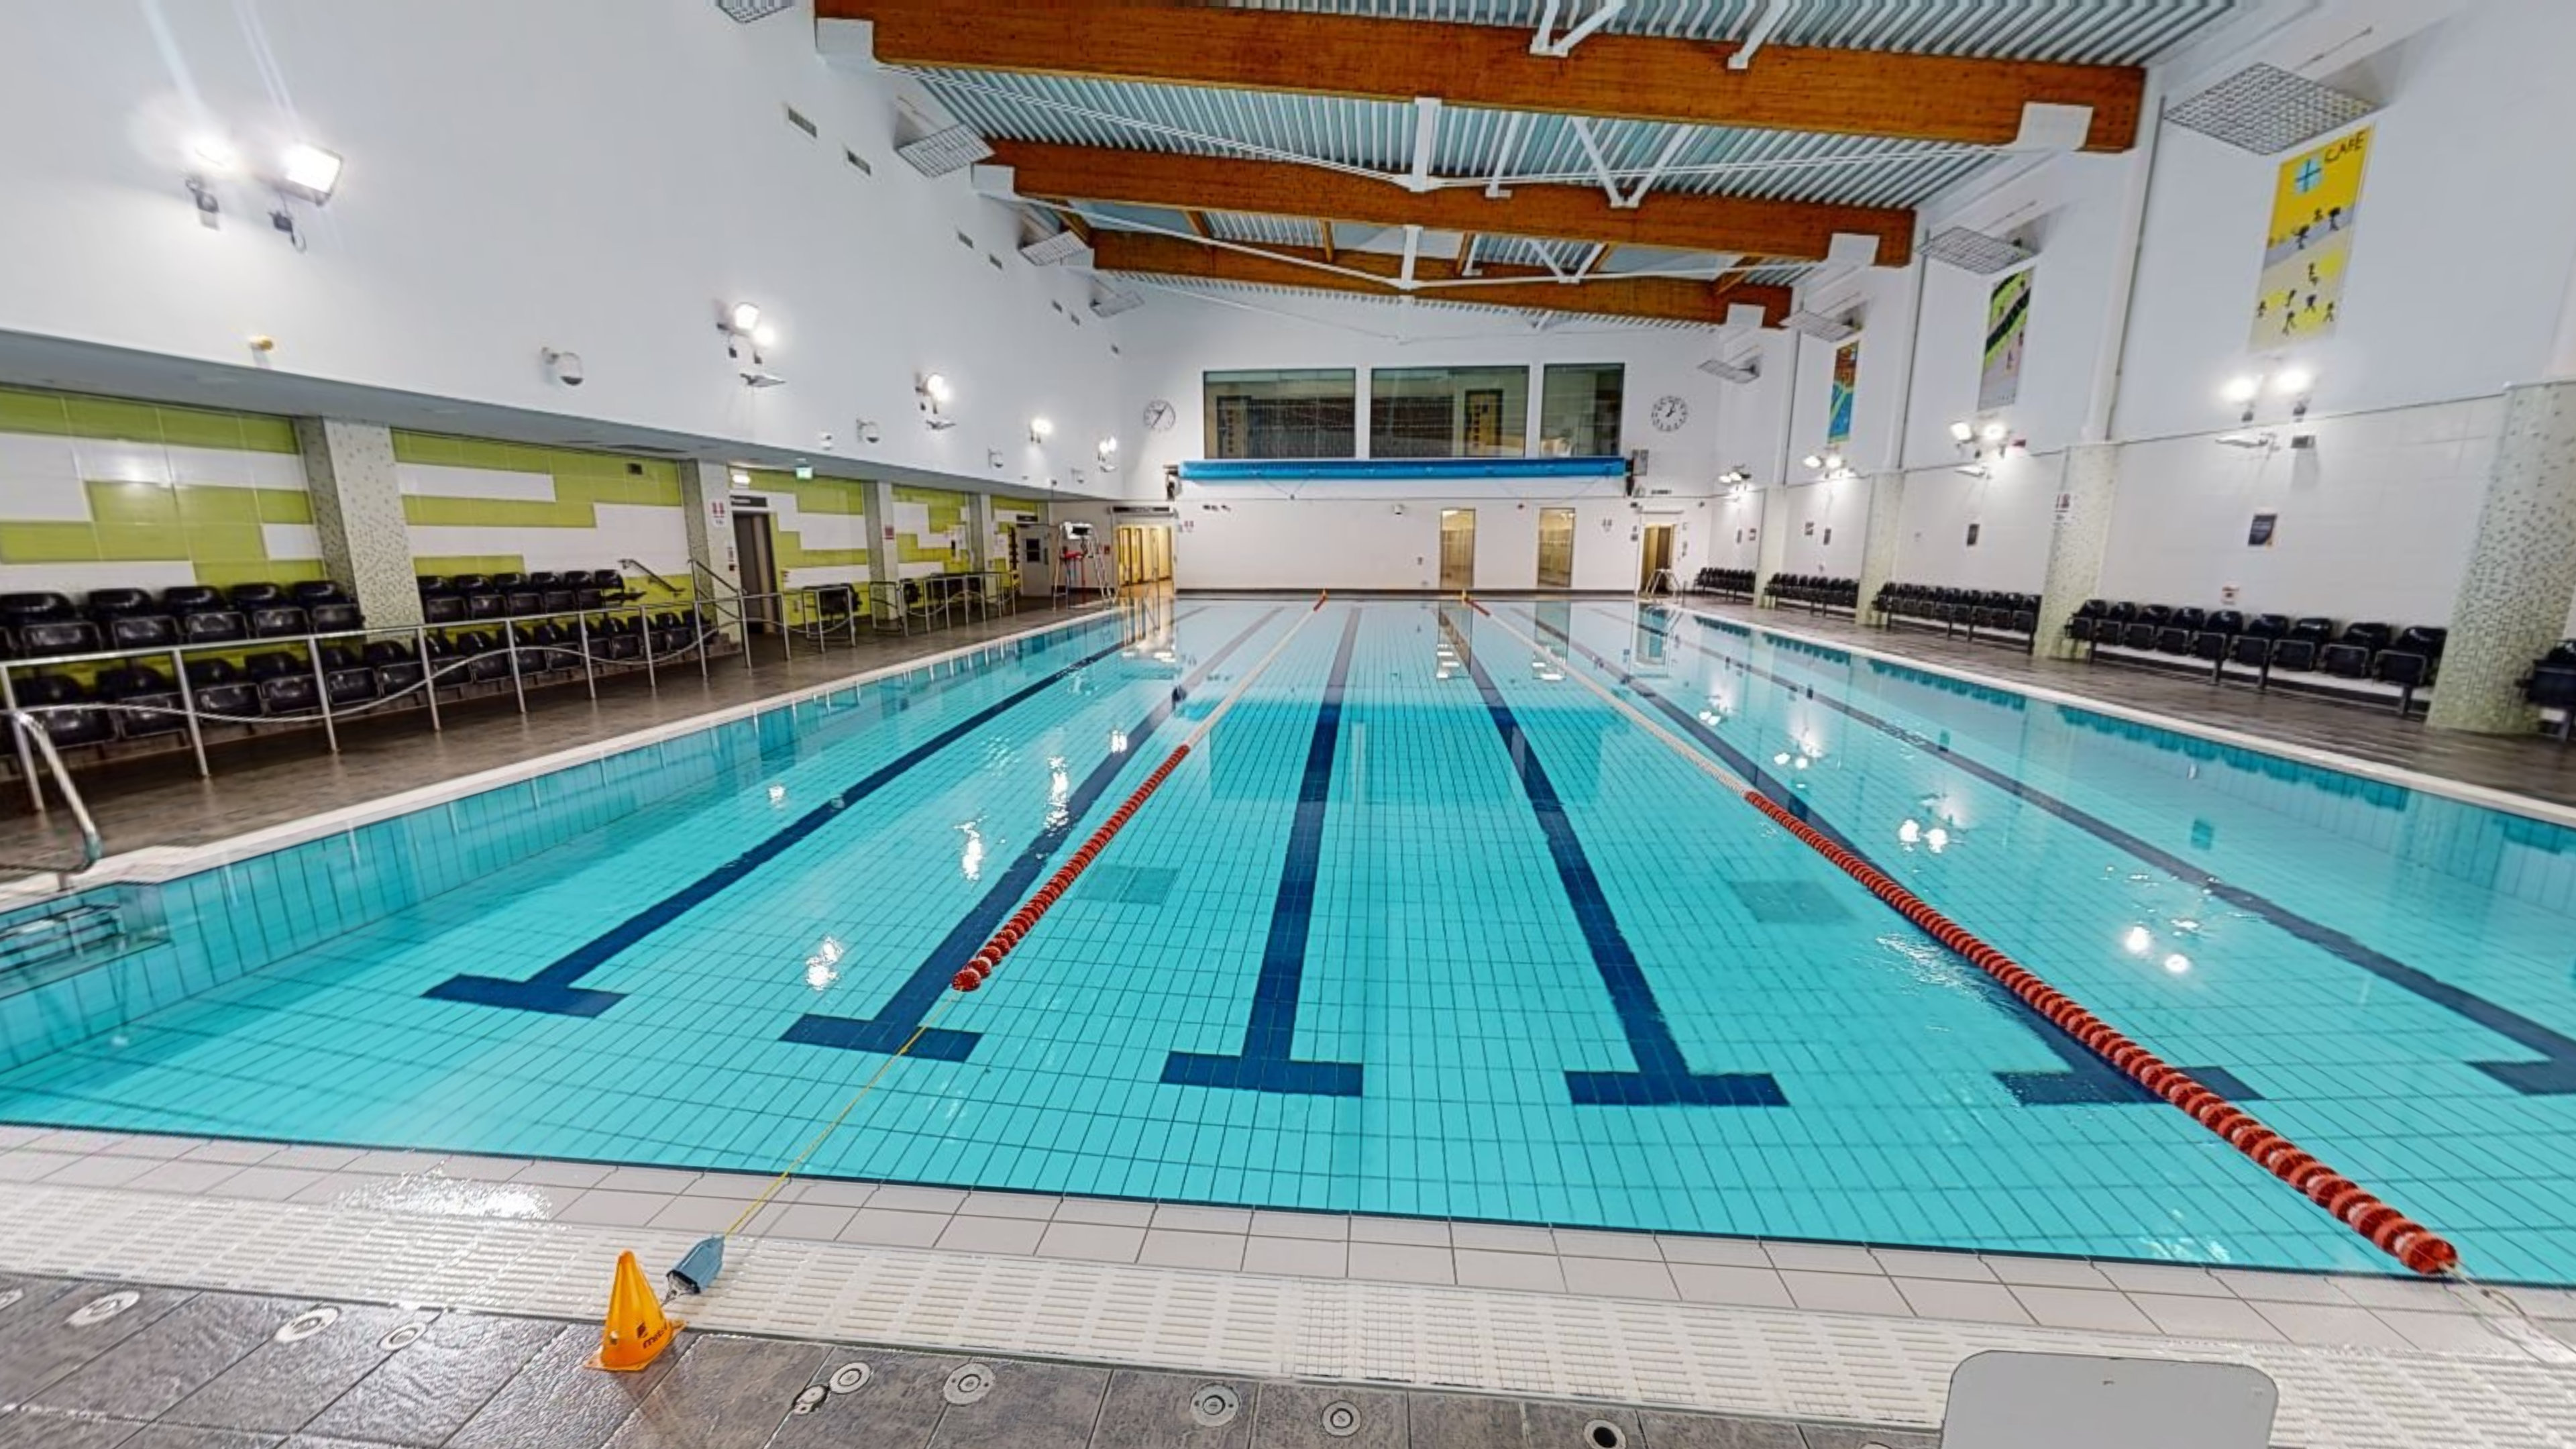 Swimming pool at Harborne Pool & Fitness Centre Harborne Pool & Fitness Centre Birmingham 01214 286820